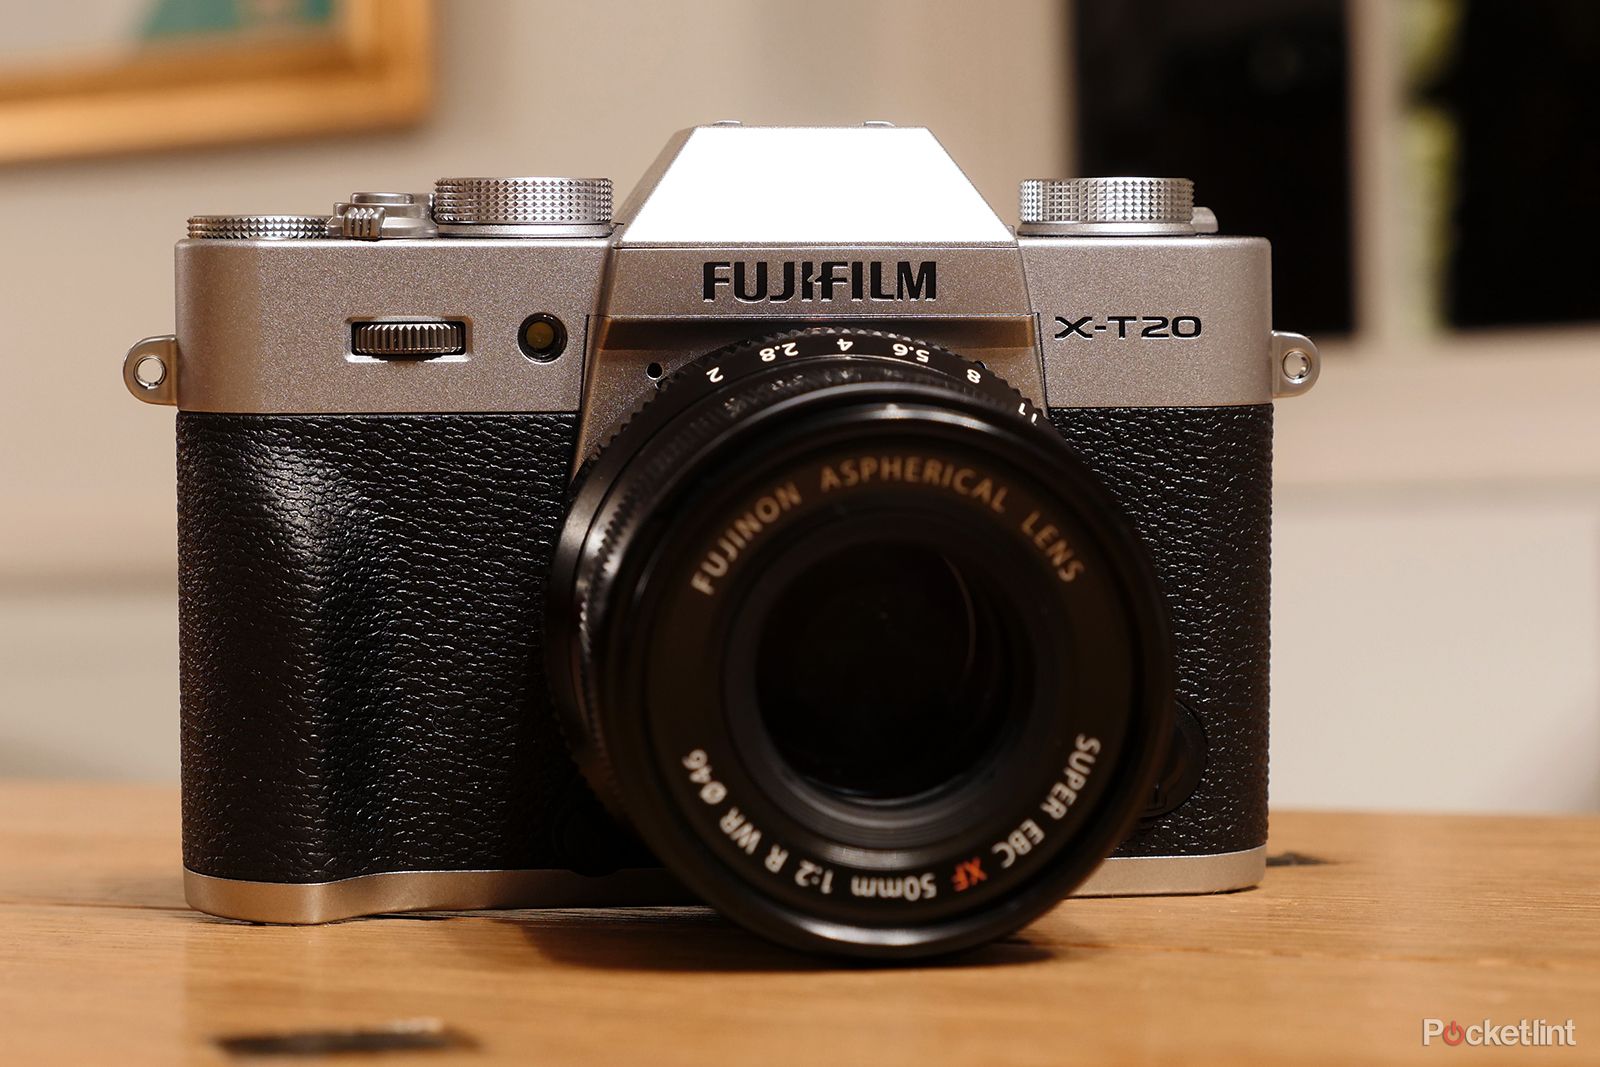 Fujifilm X-T20 review: The retro touch